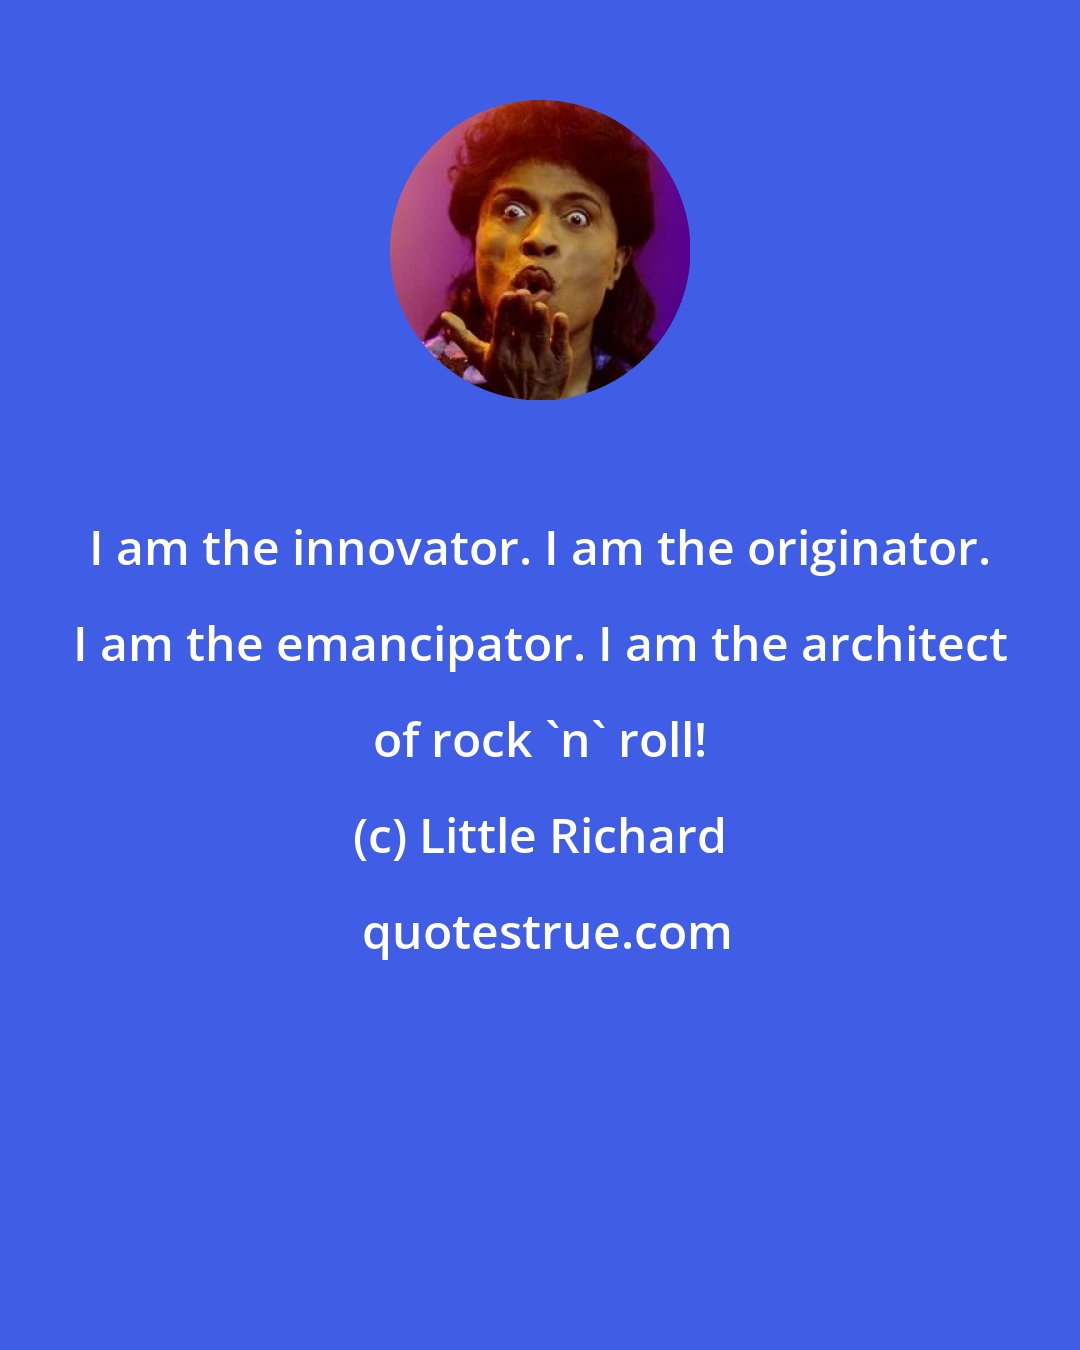 Little Richard: I am the innovator. I am the originator. I am the emancipator. I am the architect of rock 'n' roll!